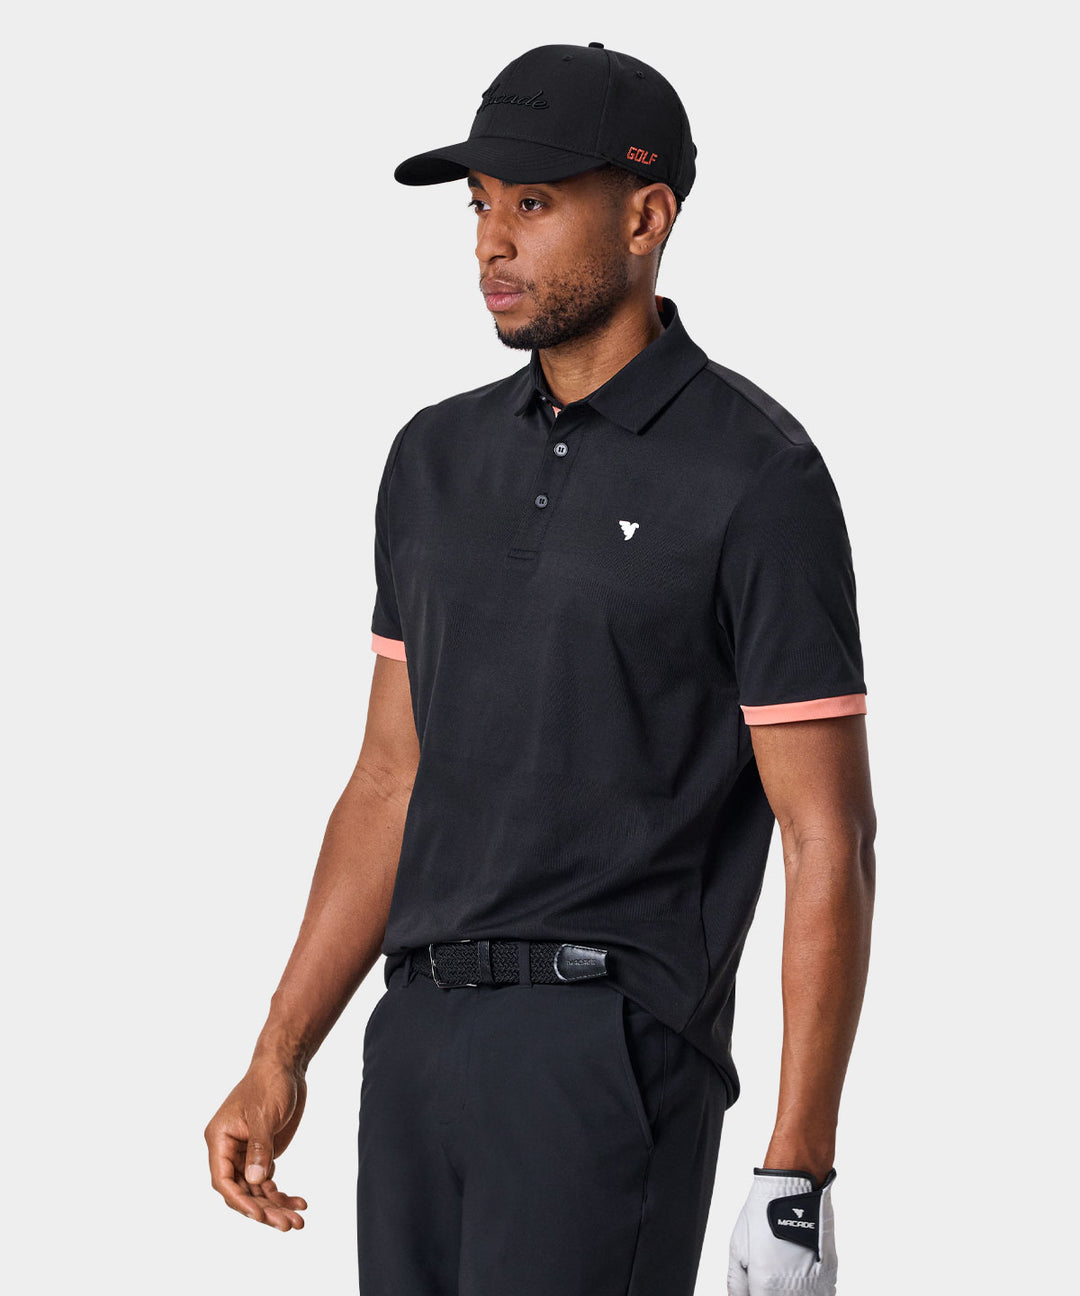 Cole Black Performance Shirt Macade Golf